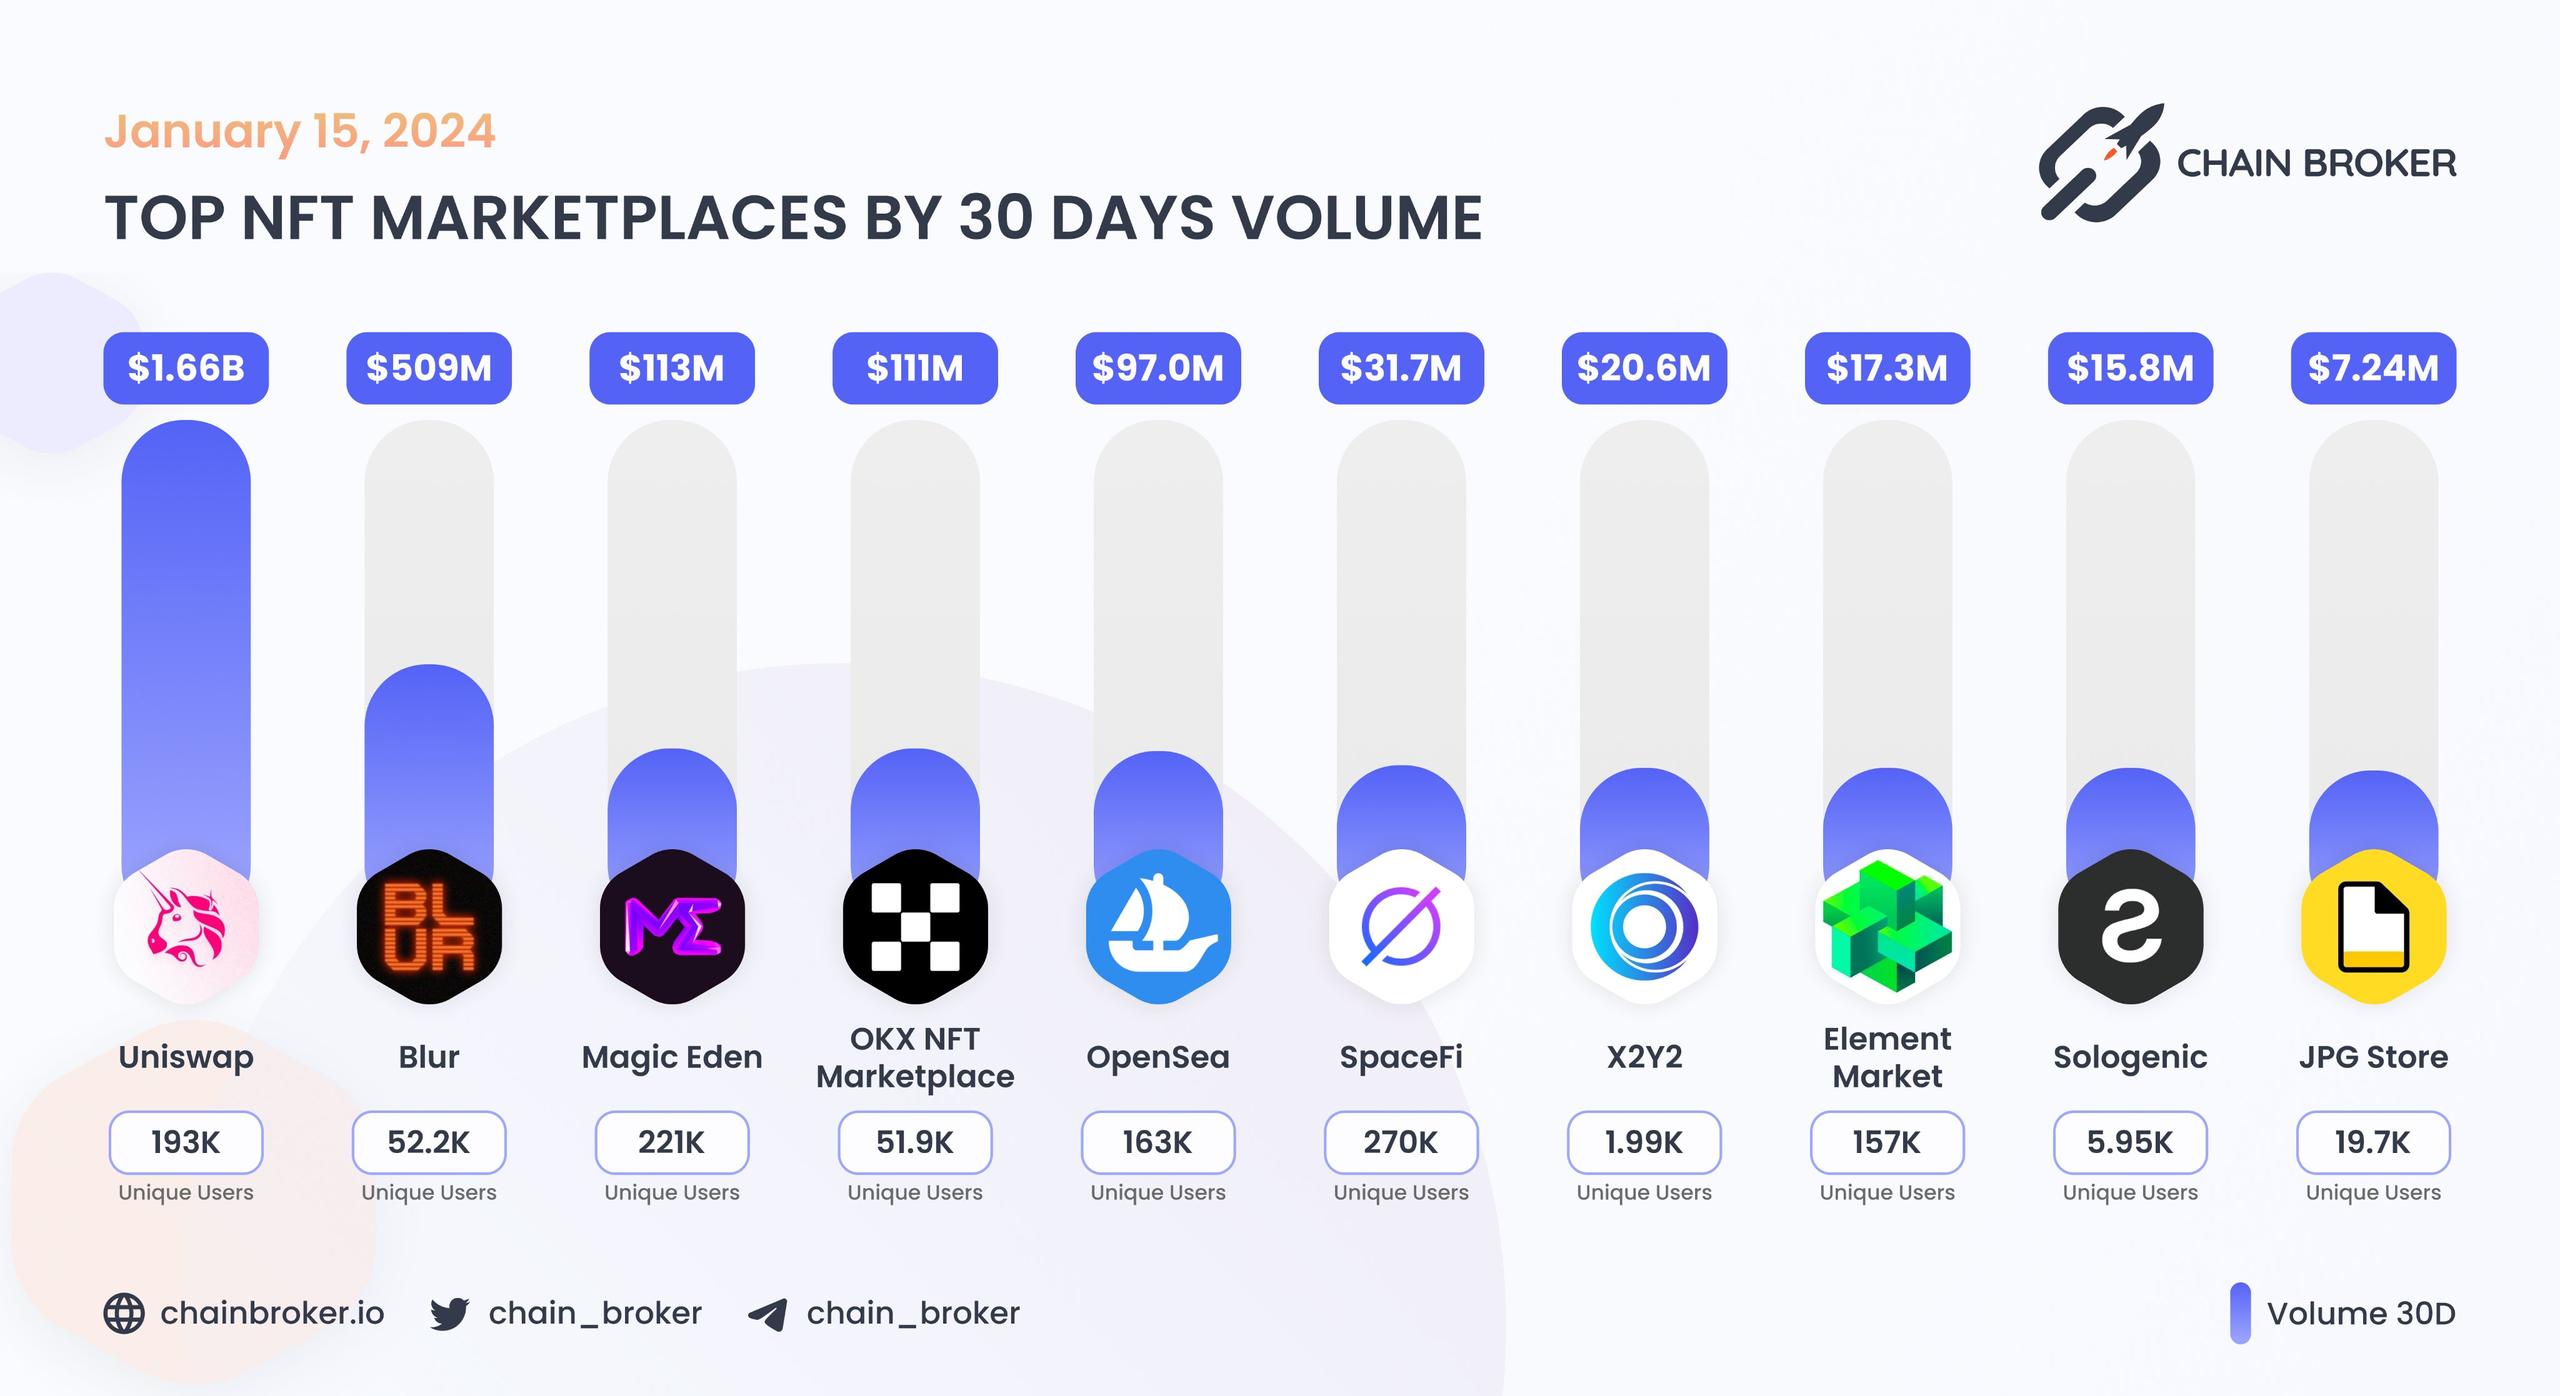 Top NFT marketplaces by 30D volume